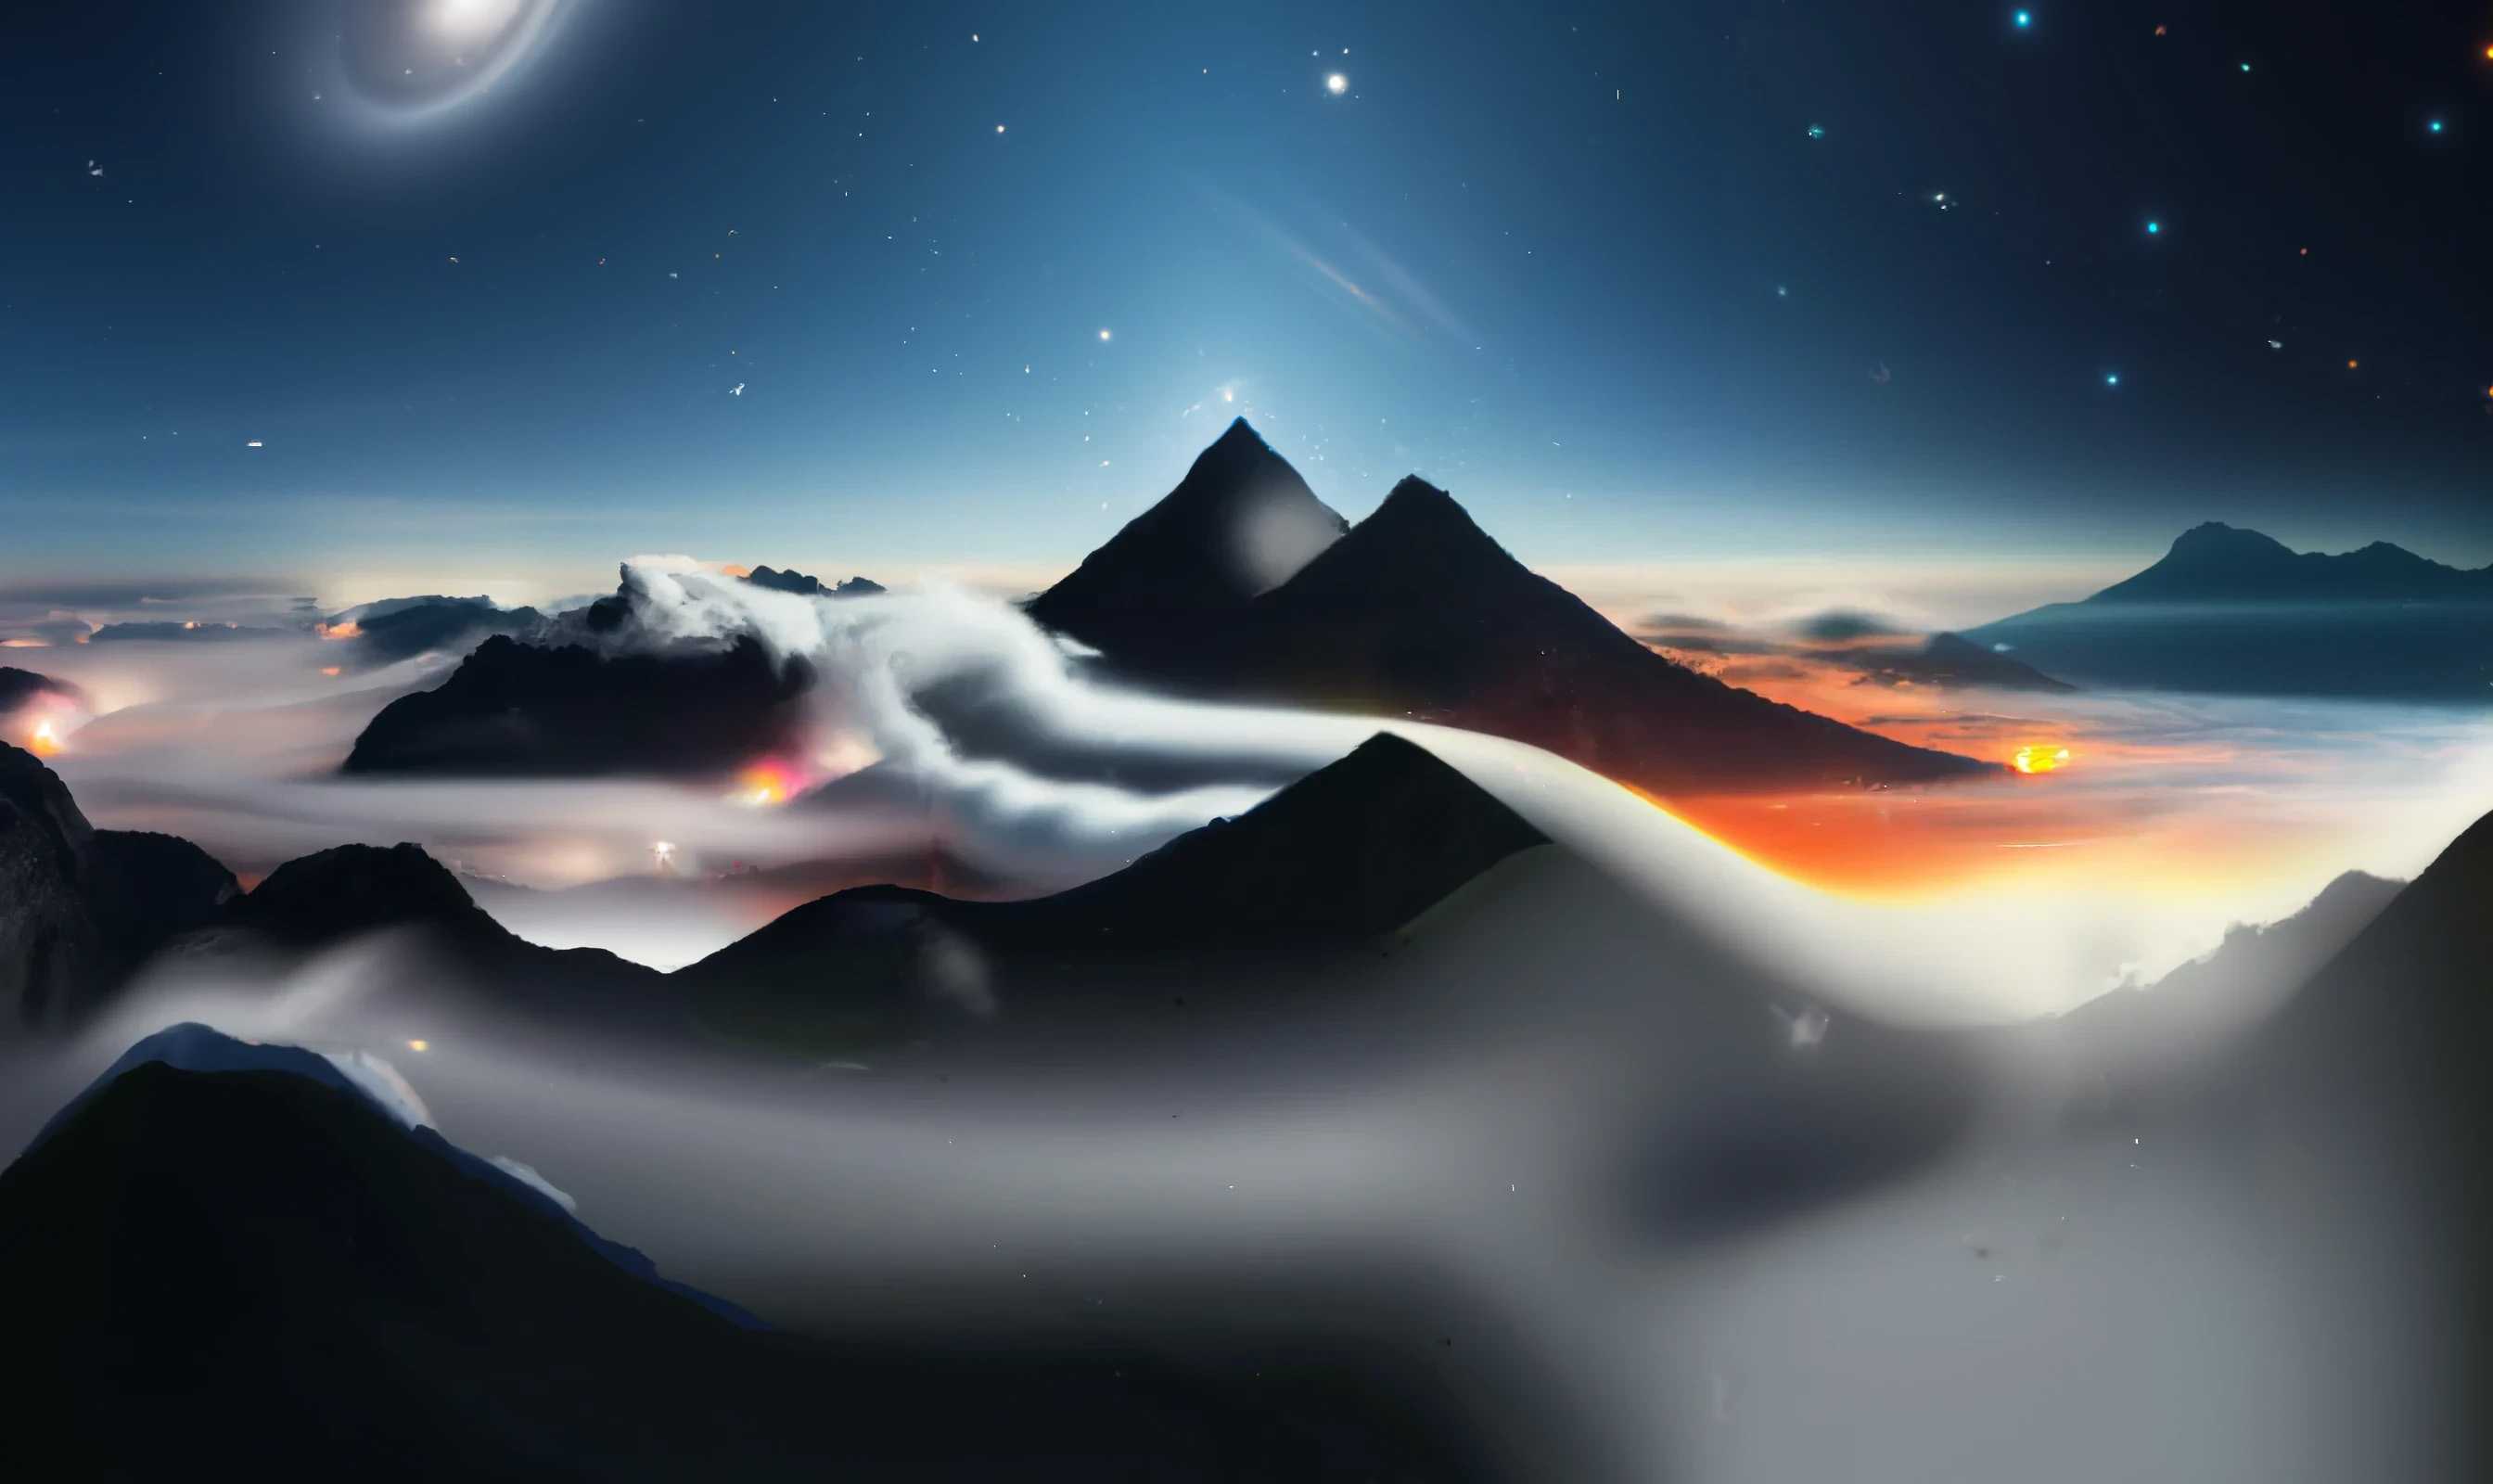 Stars emerge in the sky above twin mountain peaks